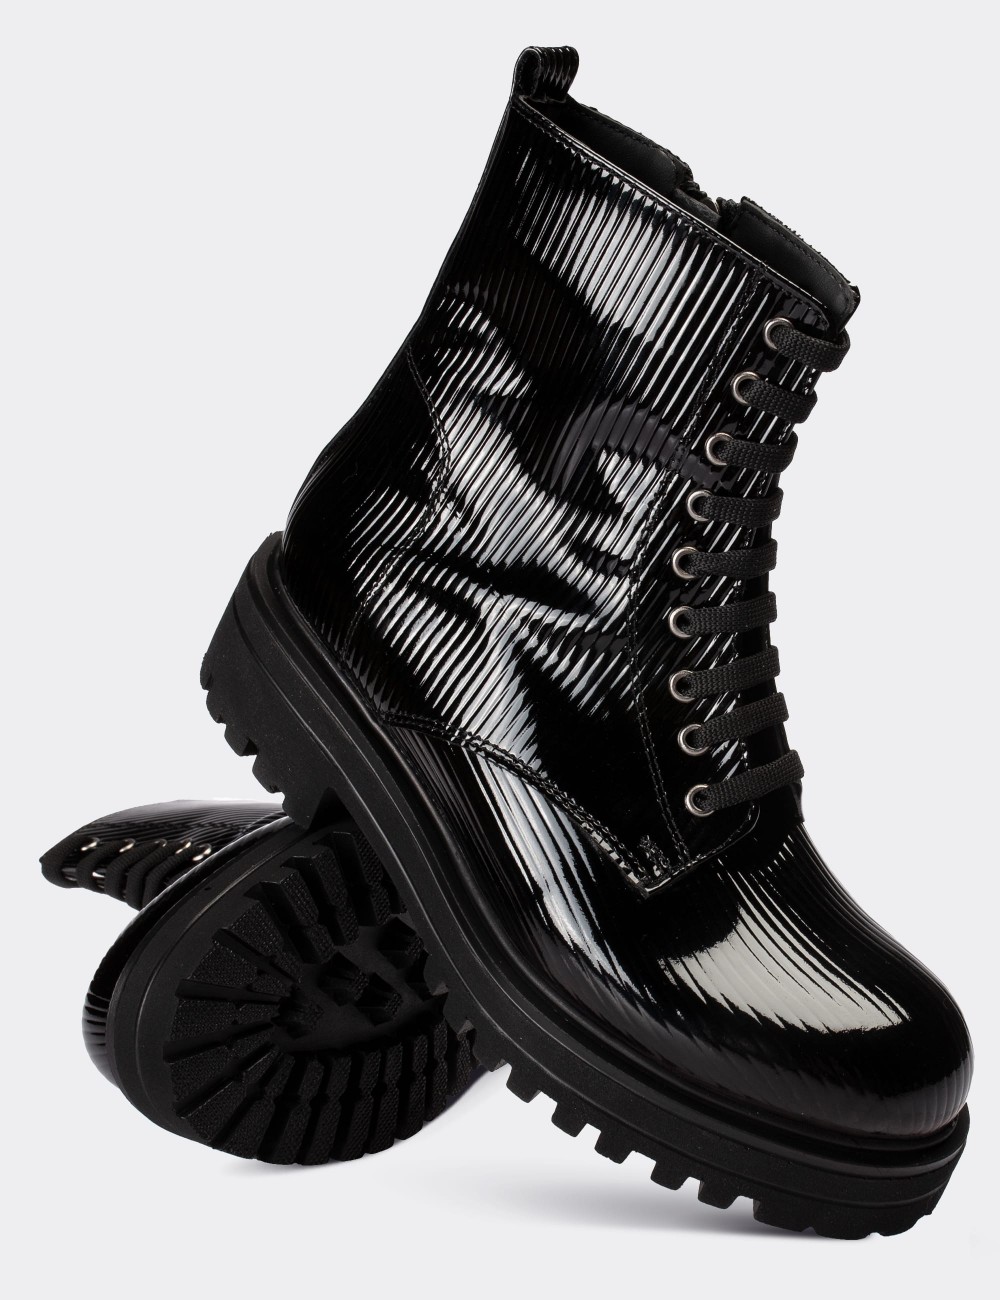 Black Patent Leather Postal Boots - 01814ZSYHE03